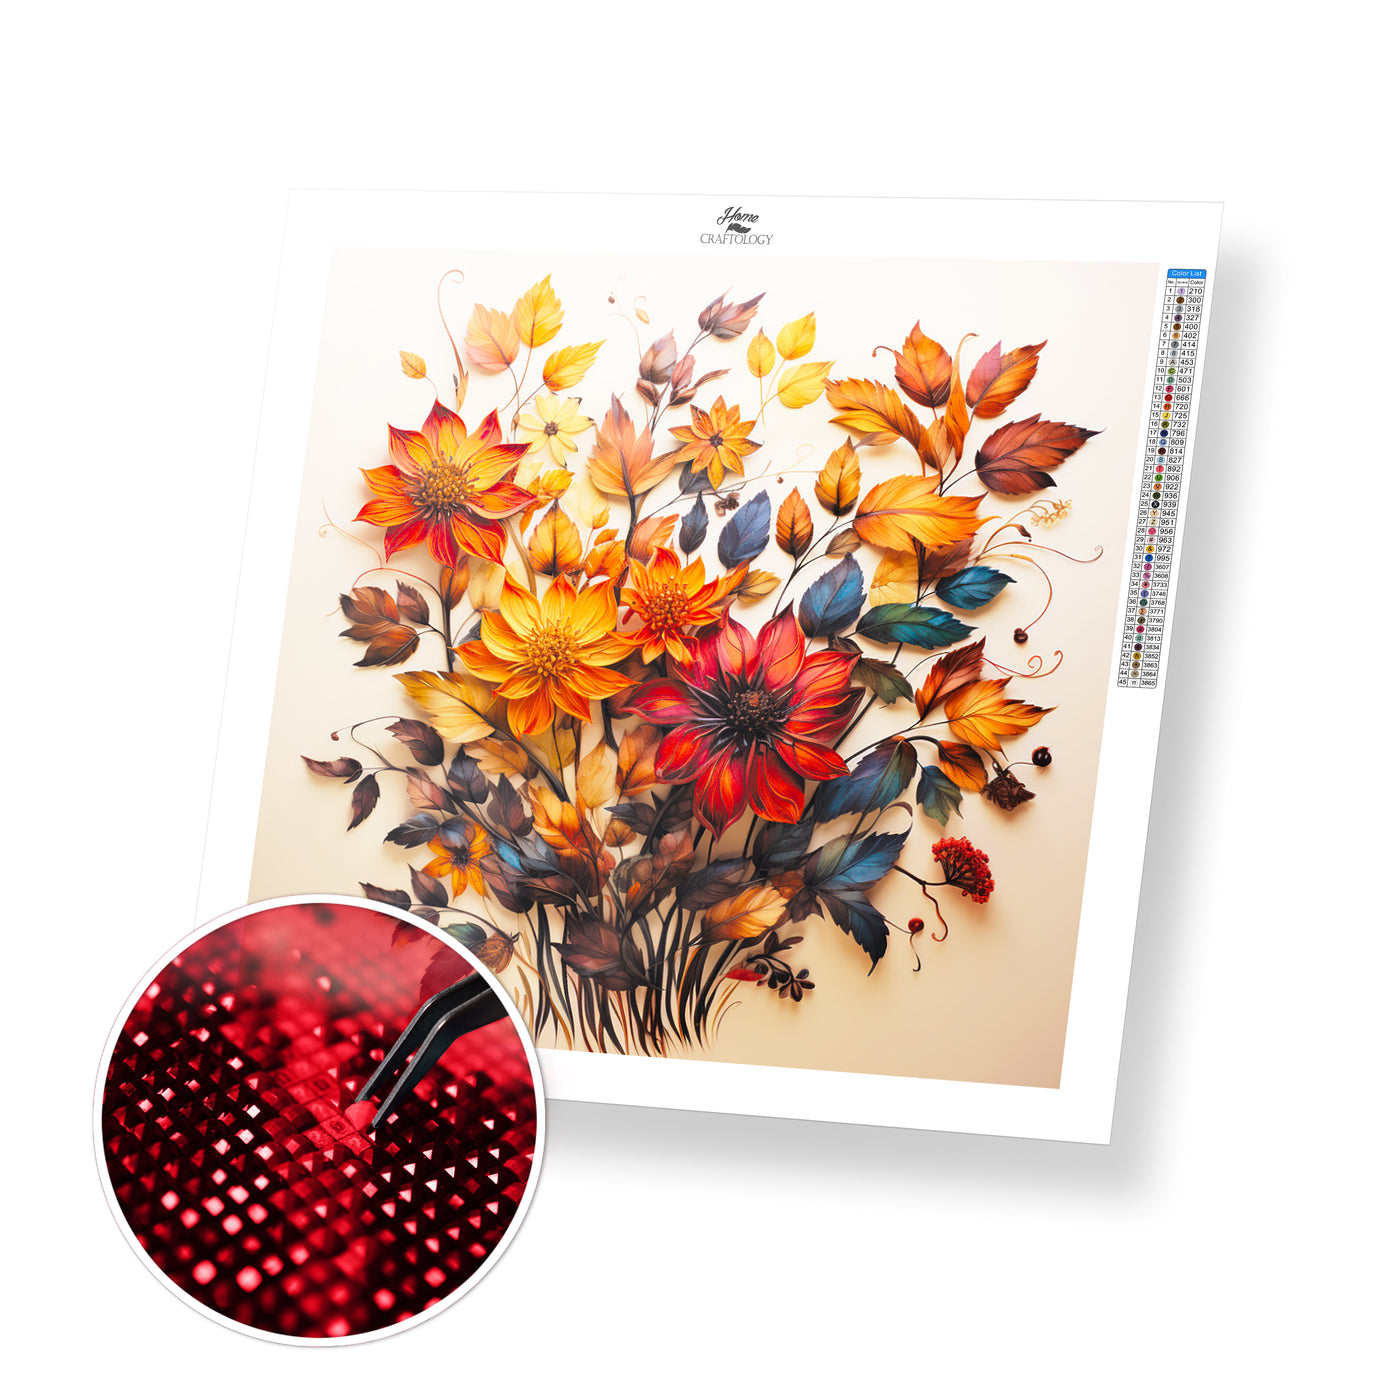 New! Autumn Flowers - Premium Diamond Painting Kit